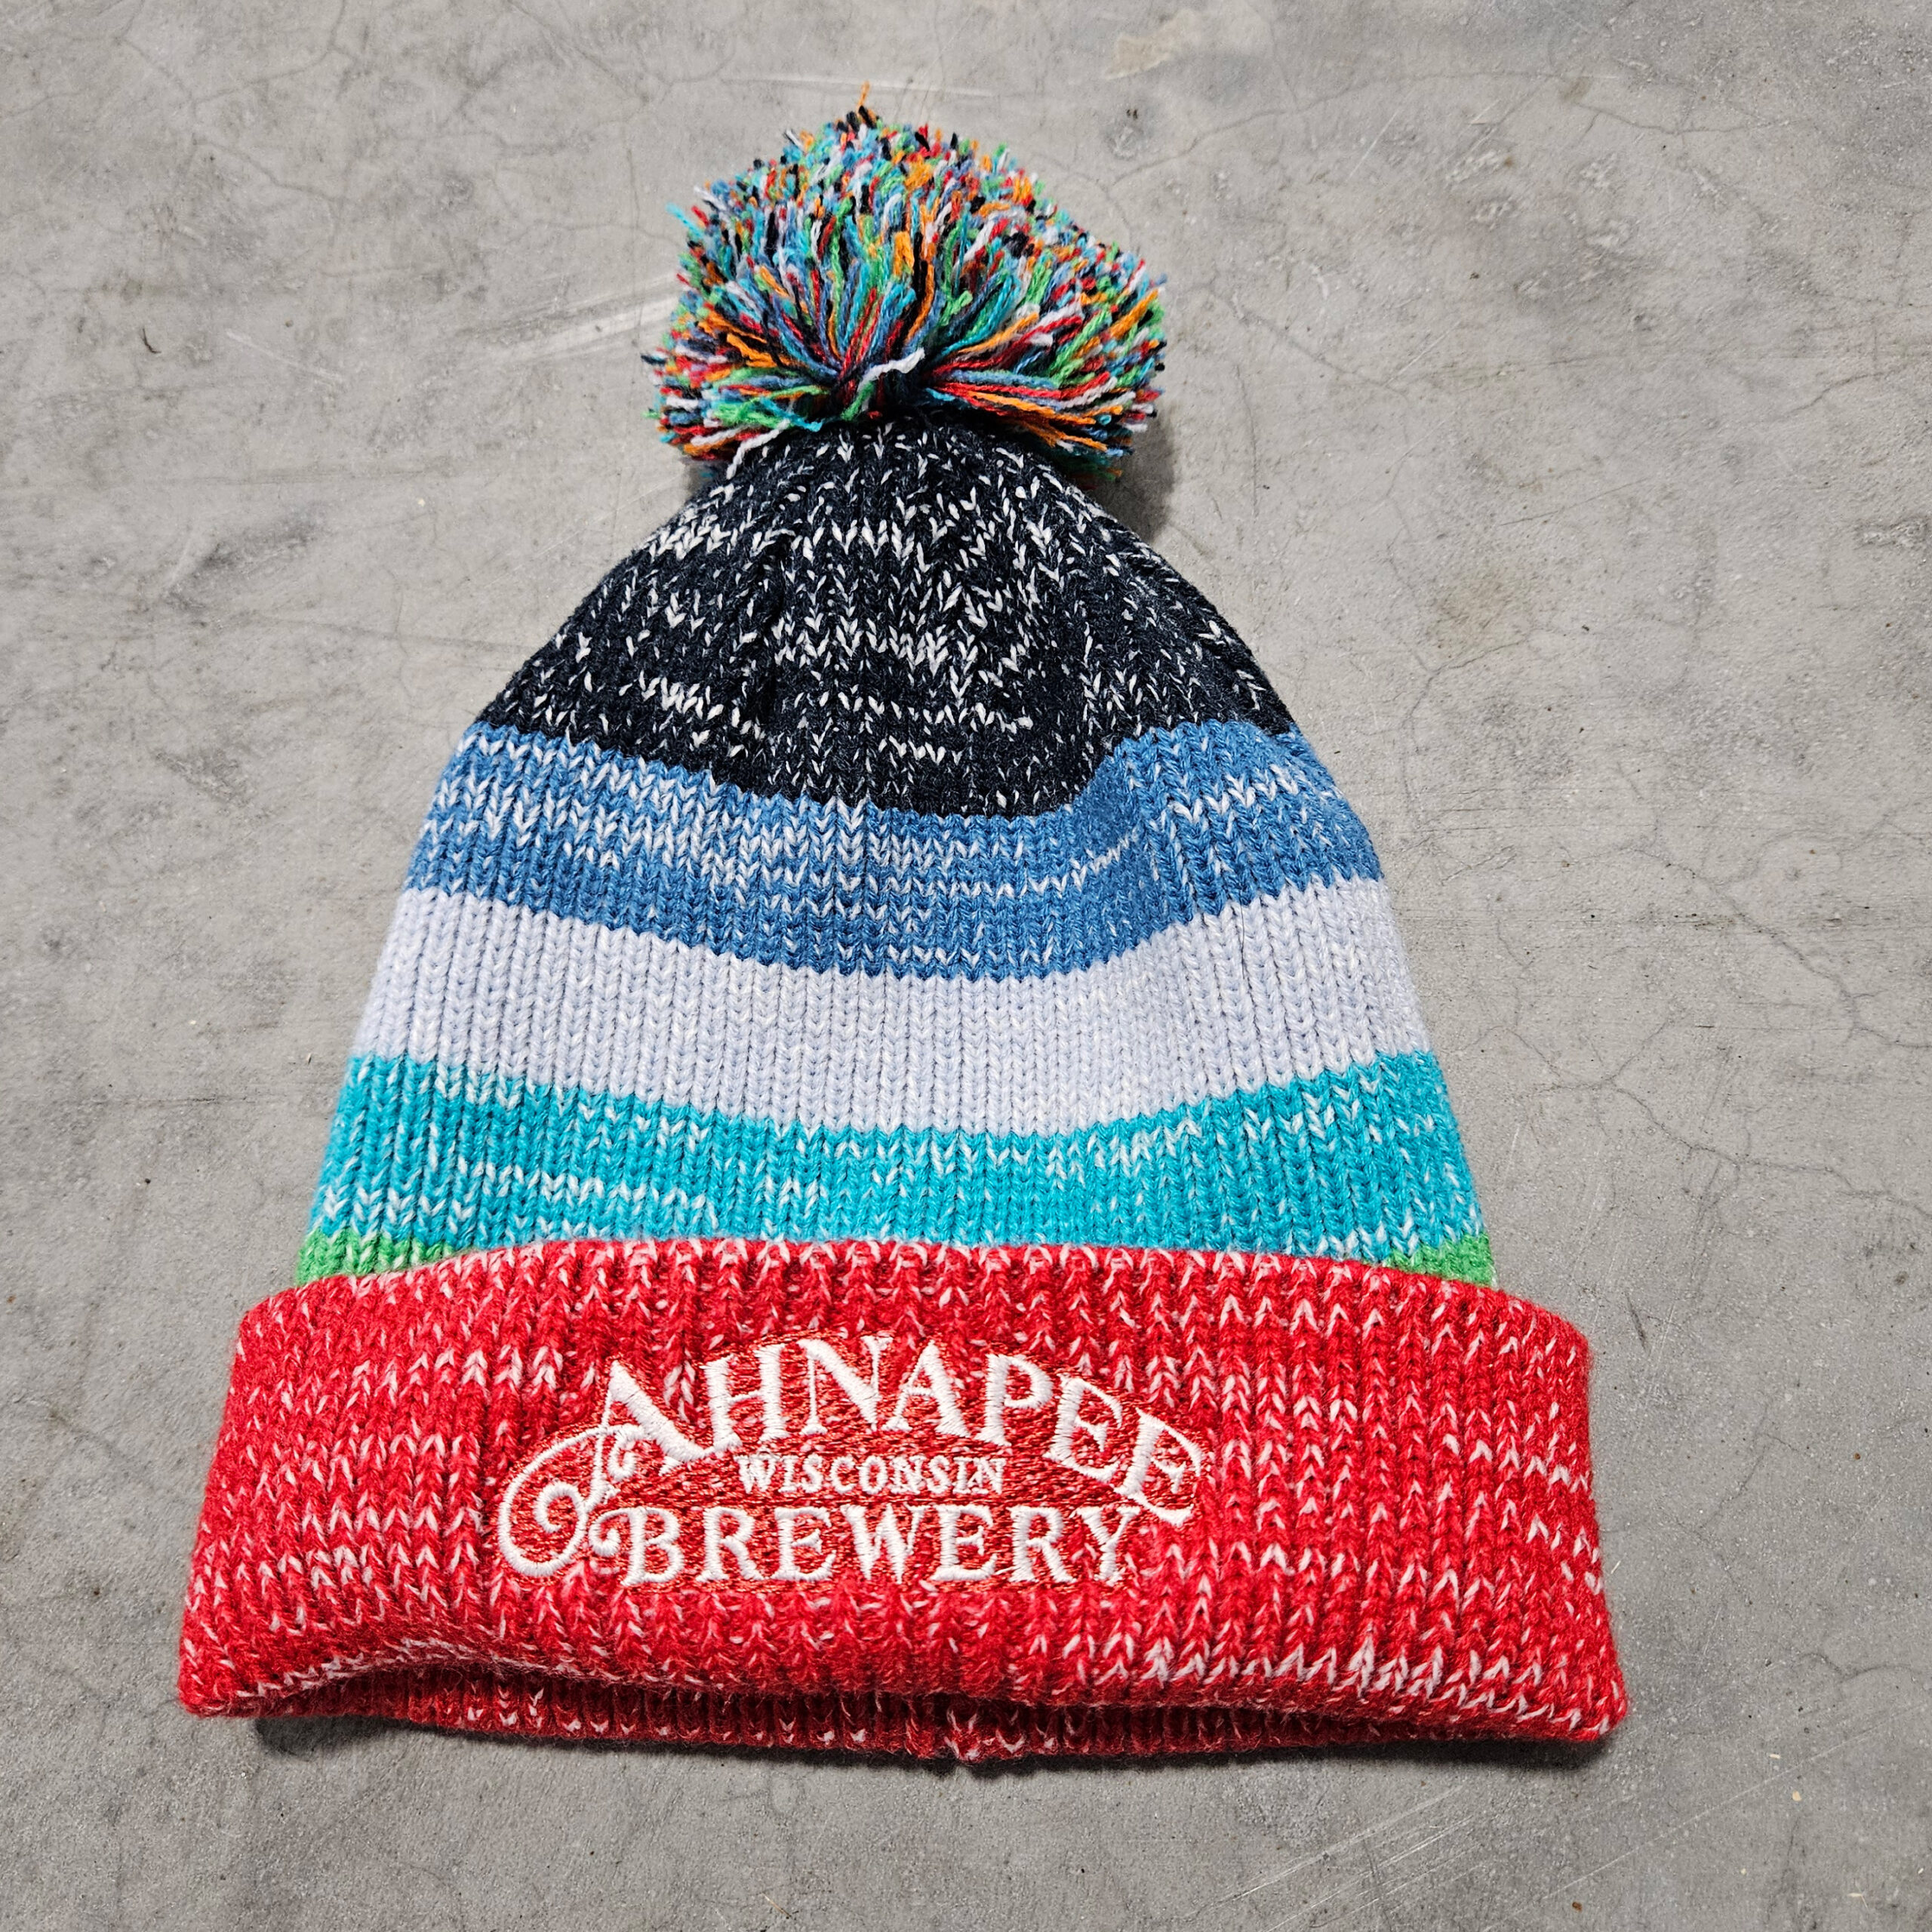 Multi-Color Pom Hat - Ahnapee Brewery